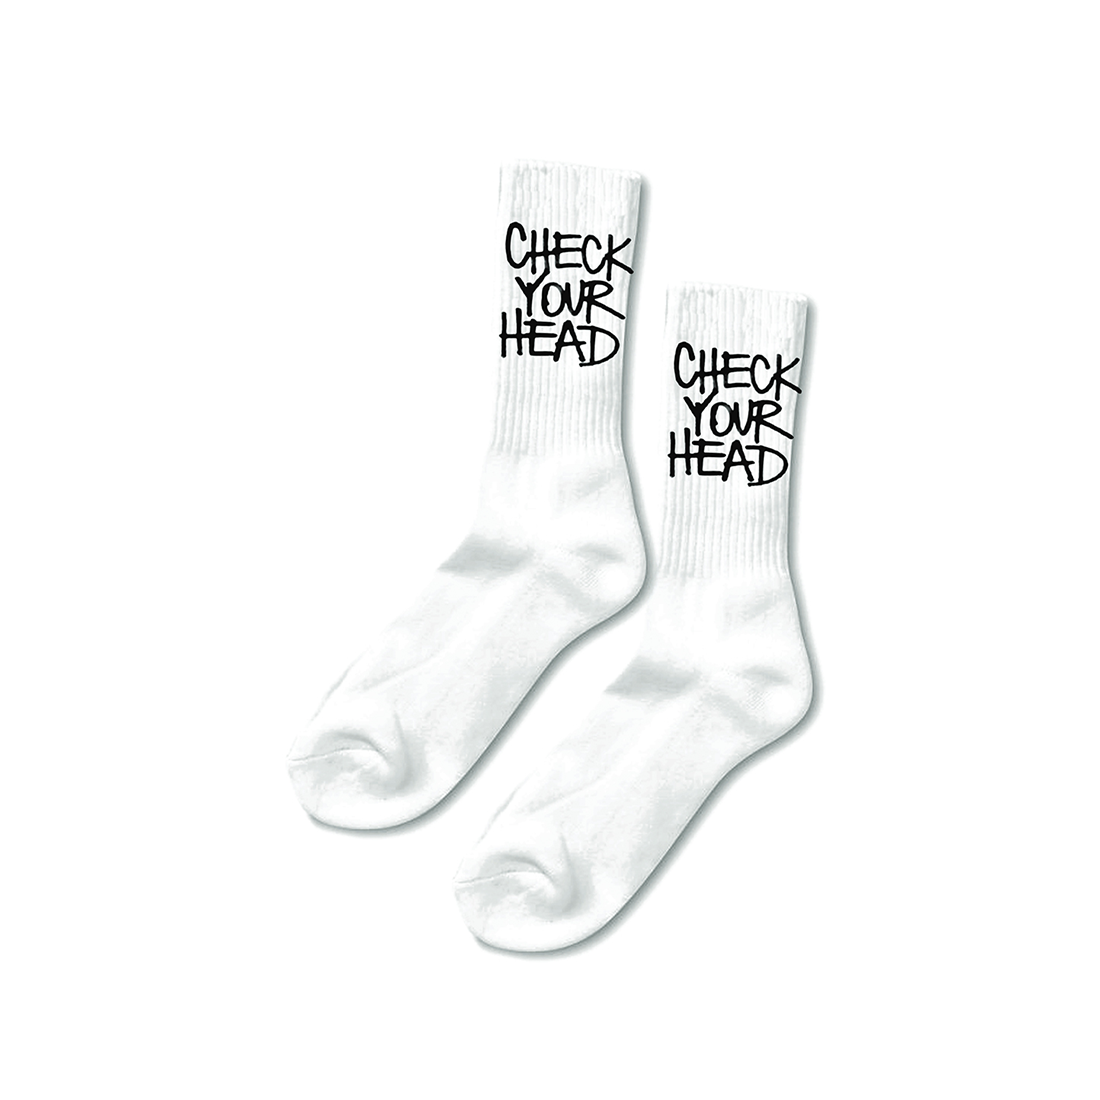 Beastie Boys - Check your head socks